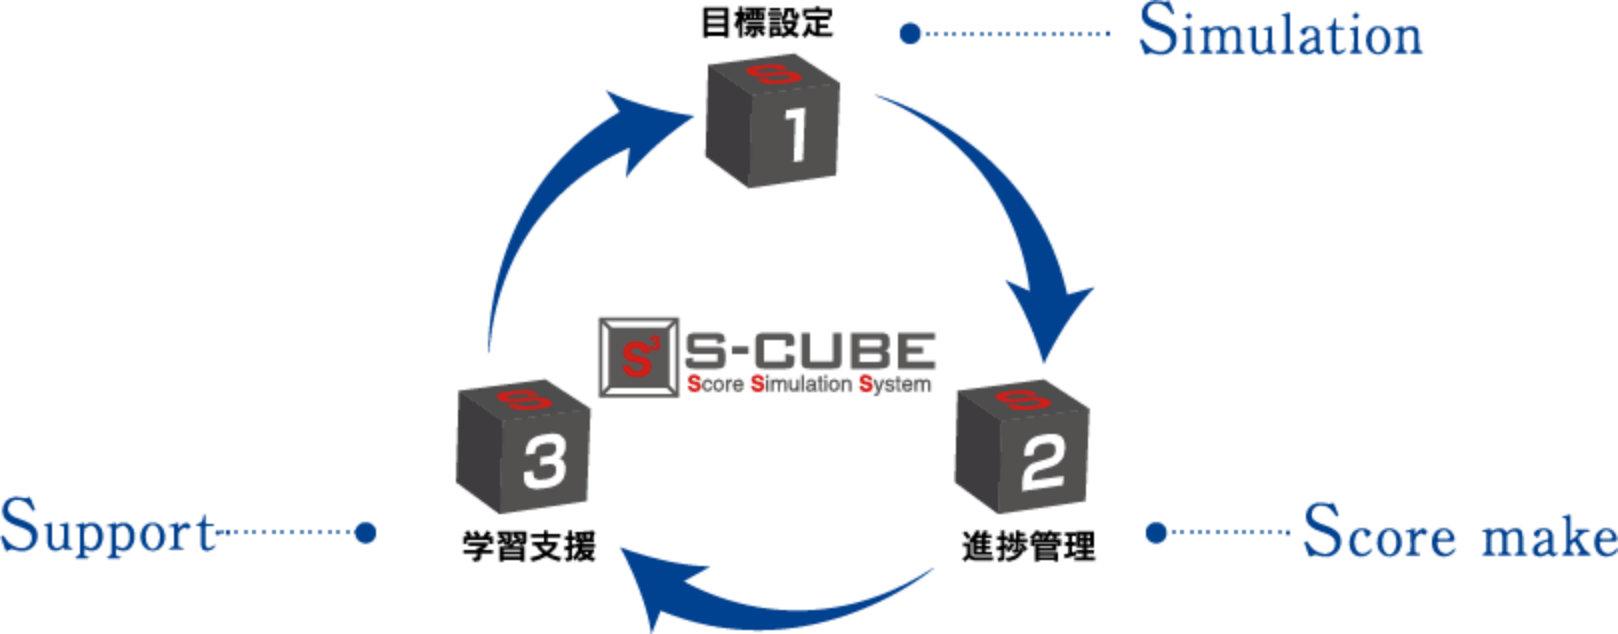 S-CUBE Score Simulation System 目標設定、進捗管理、学習支援